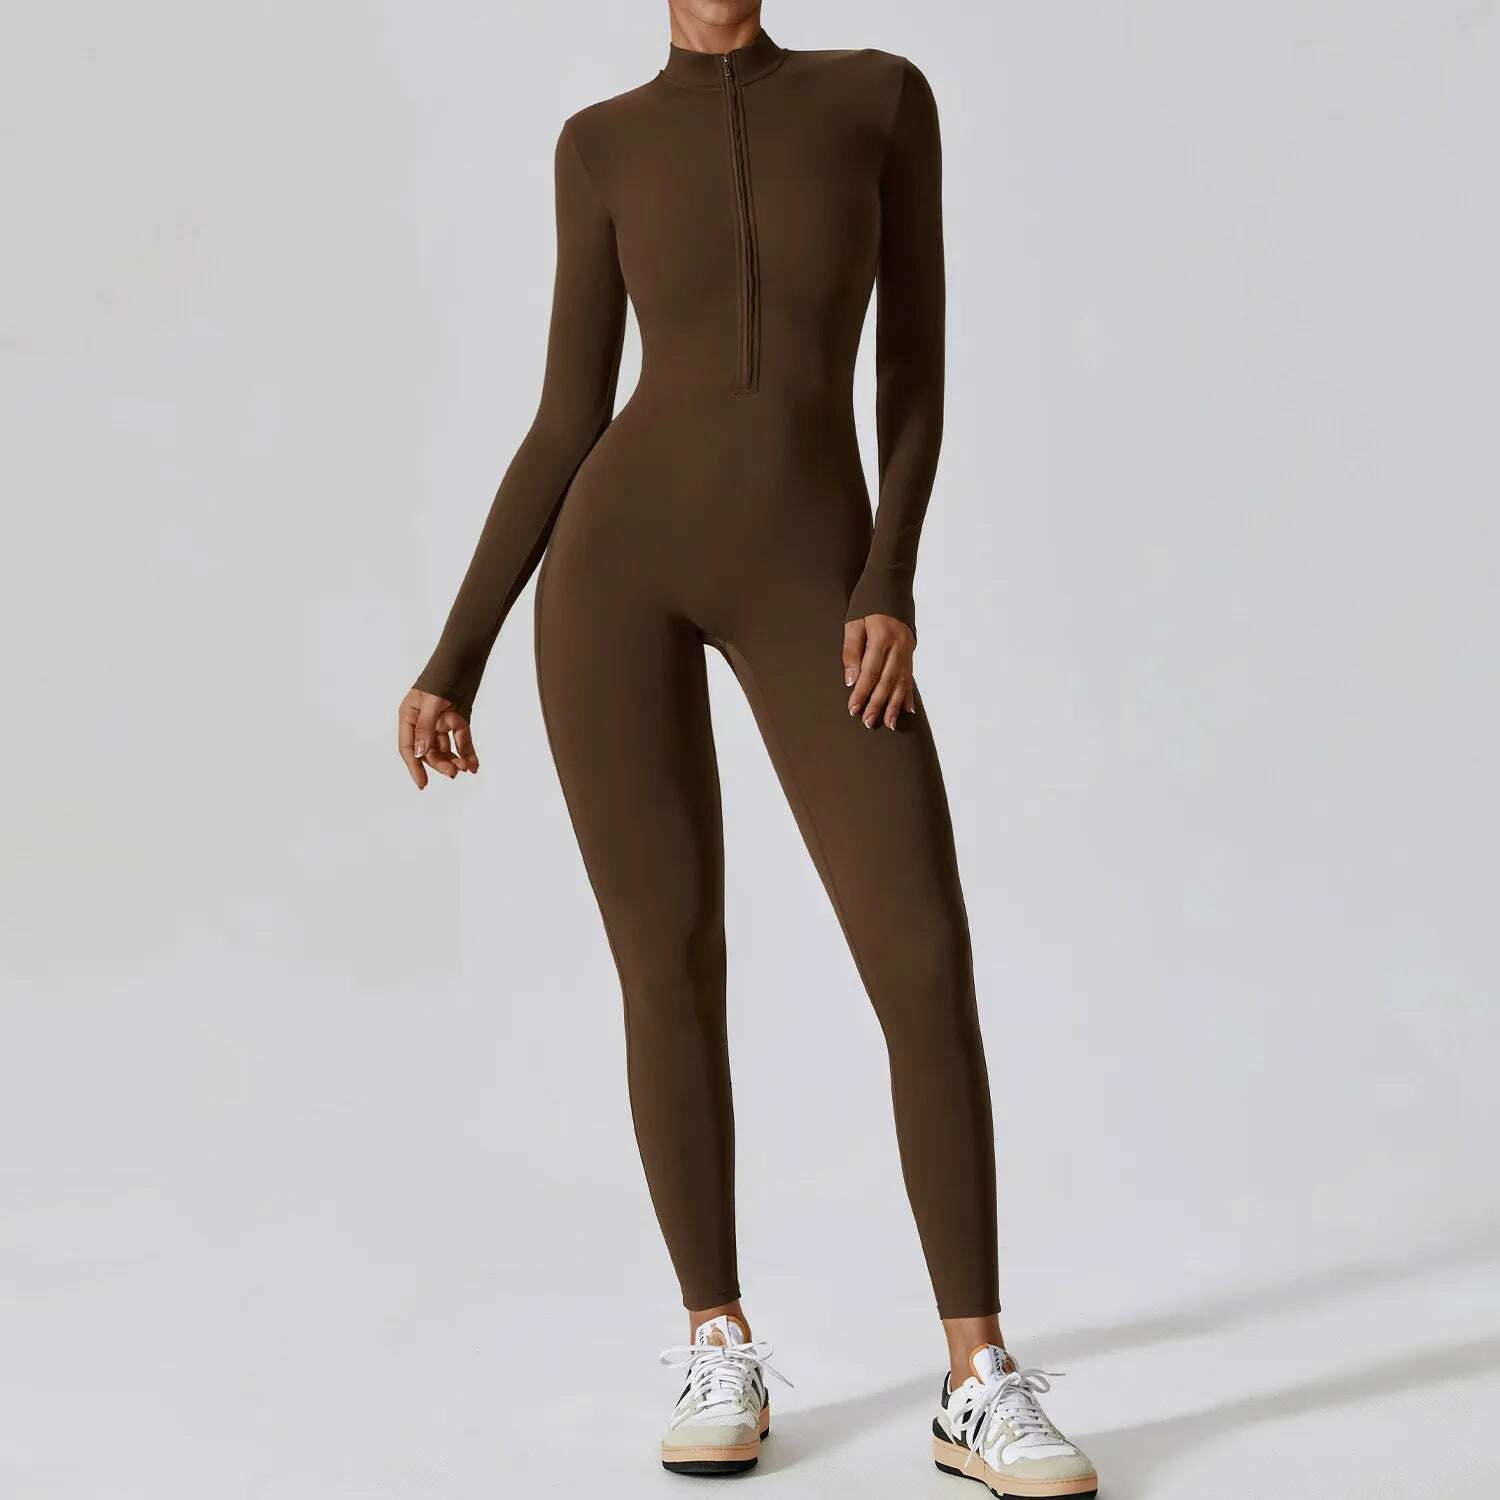 KIMLUD, Yoga Boilersuit Long Sleeved Women's Sportswear Gym Zipper Jumpsuits Workout High-intensity Fitness One-piece Skin-tight Garment, Jiaocha Coffee / S / CHINA, KIMLUD Womens Clothes